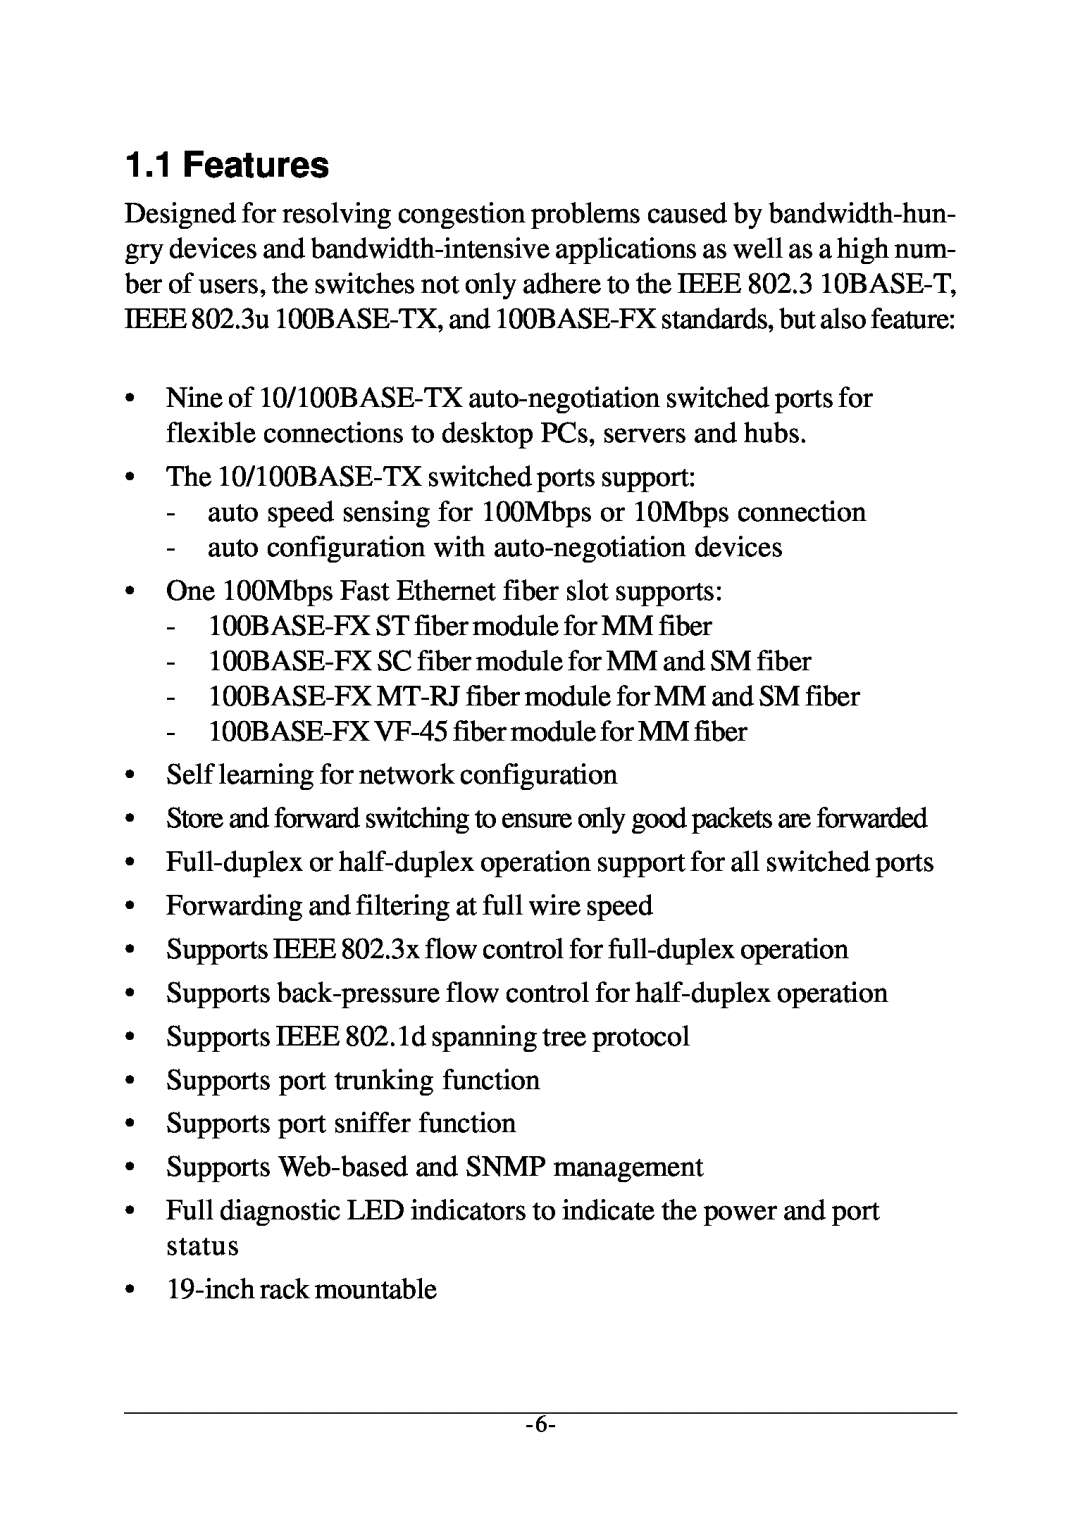 Xerox KS-801 operation manual Features 